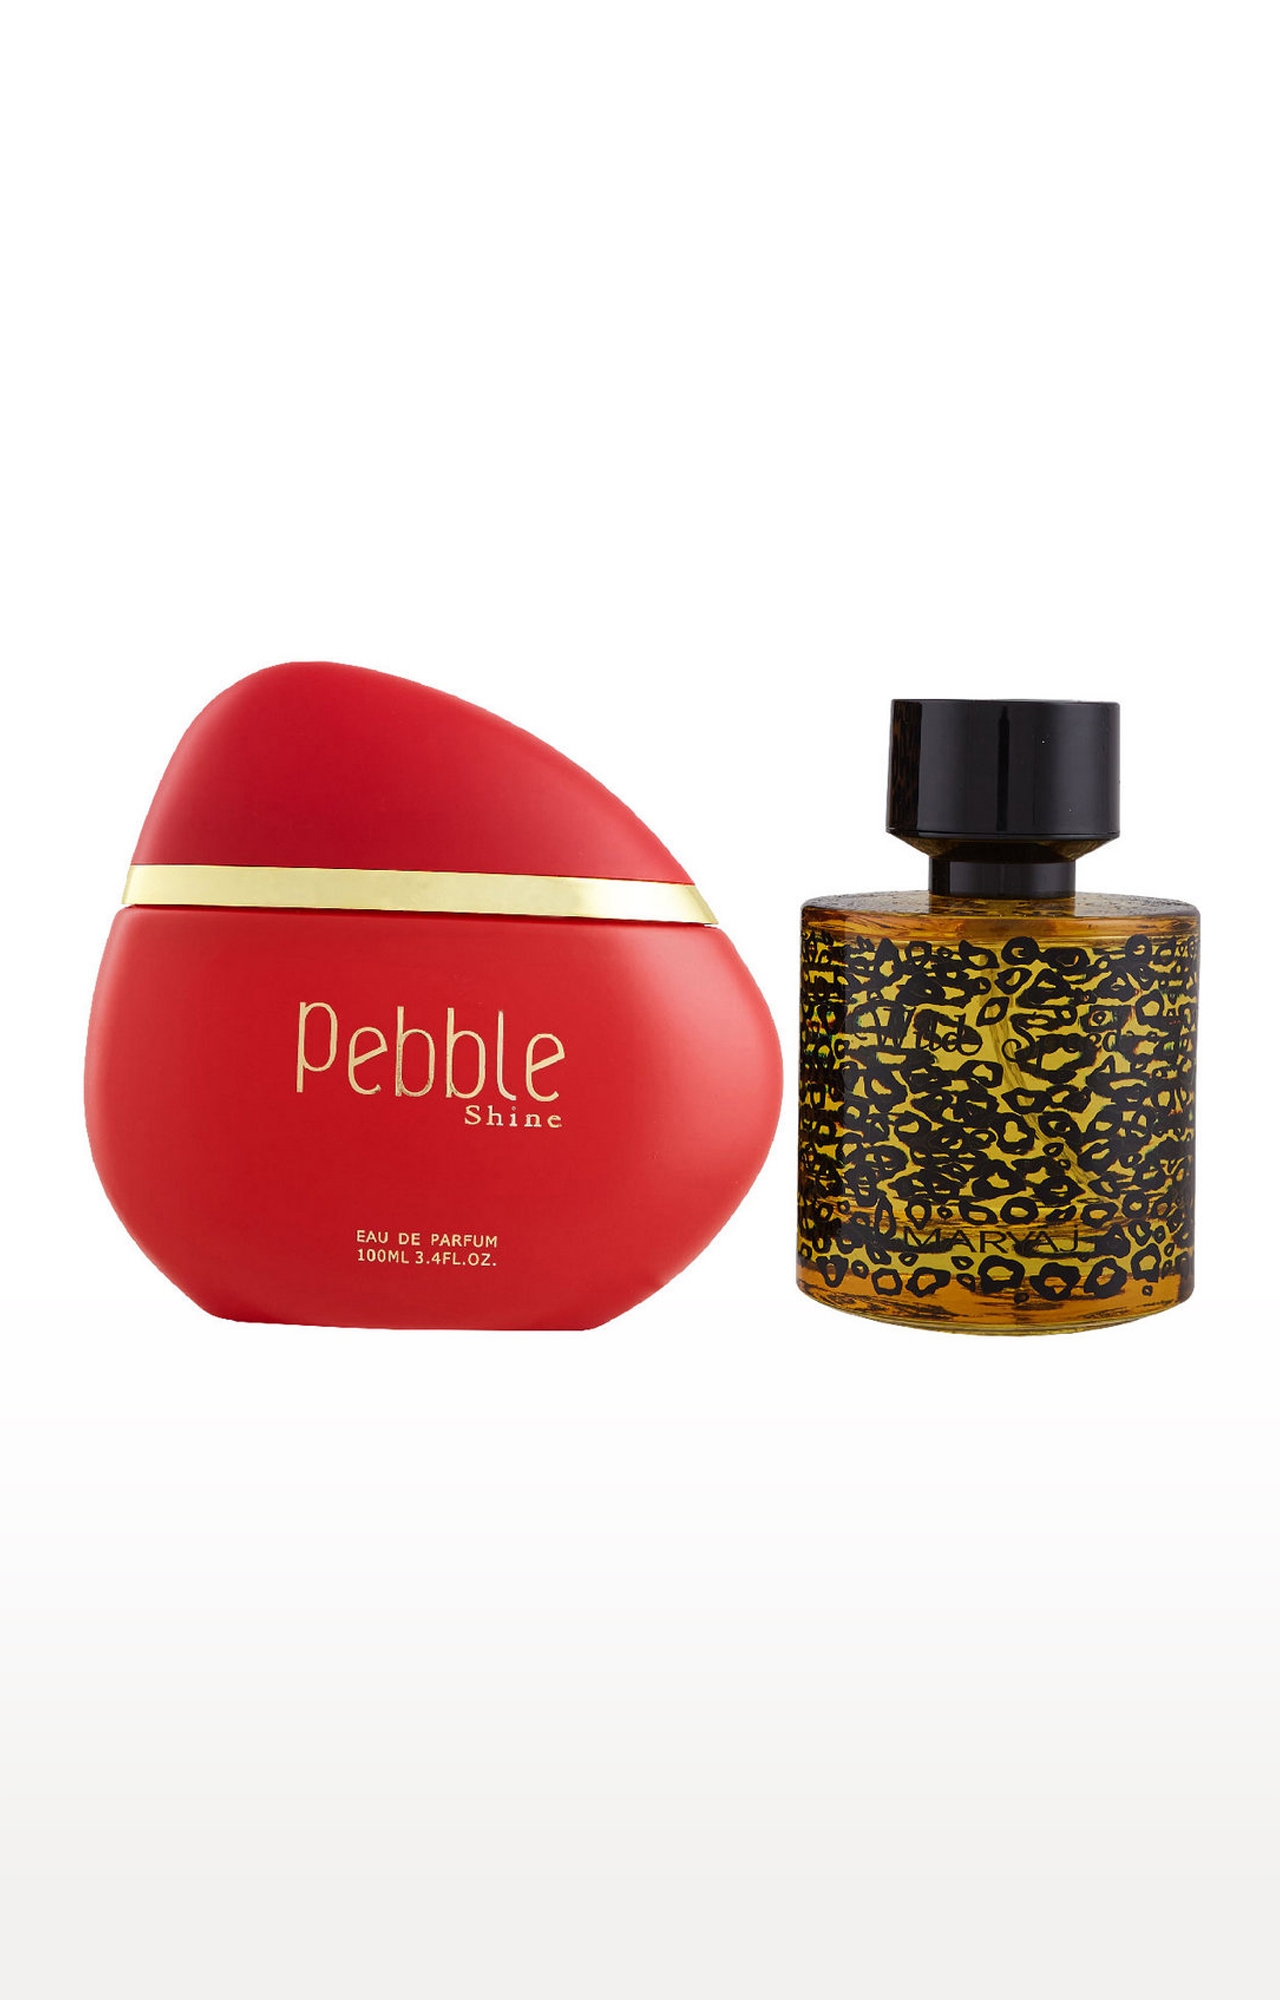 Maryaj Pebble Shine Eau De Parfum Fruity Perfume 100ml for Women and Maryaj Wild Speed Eau De Parfum Perfume 100ml for Men